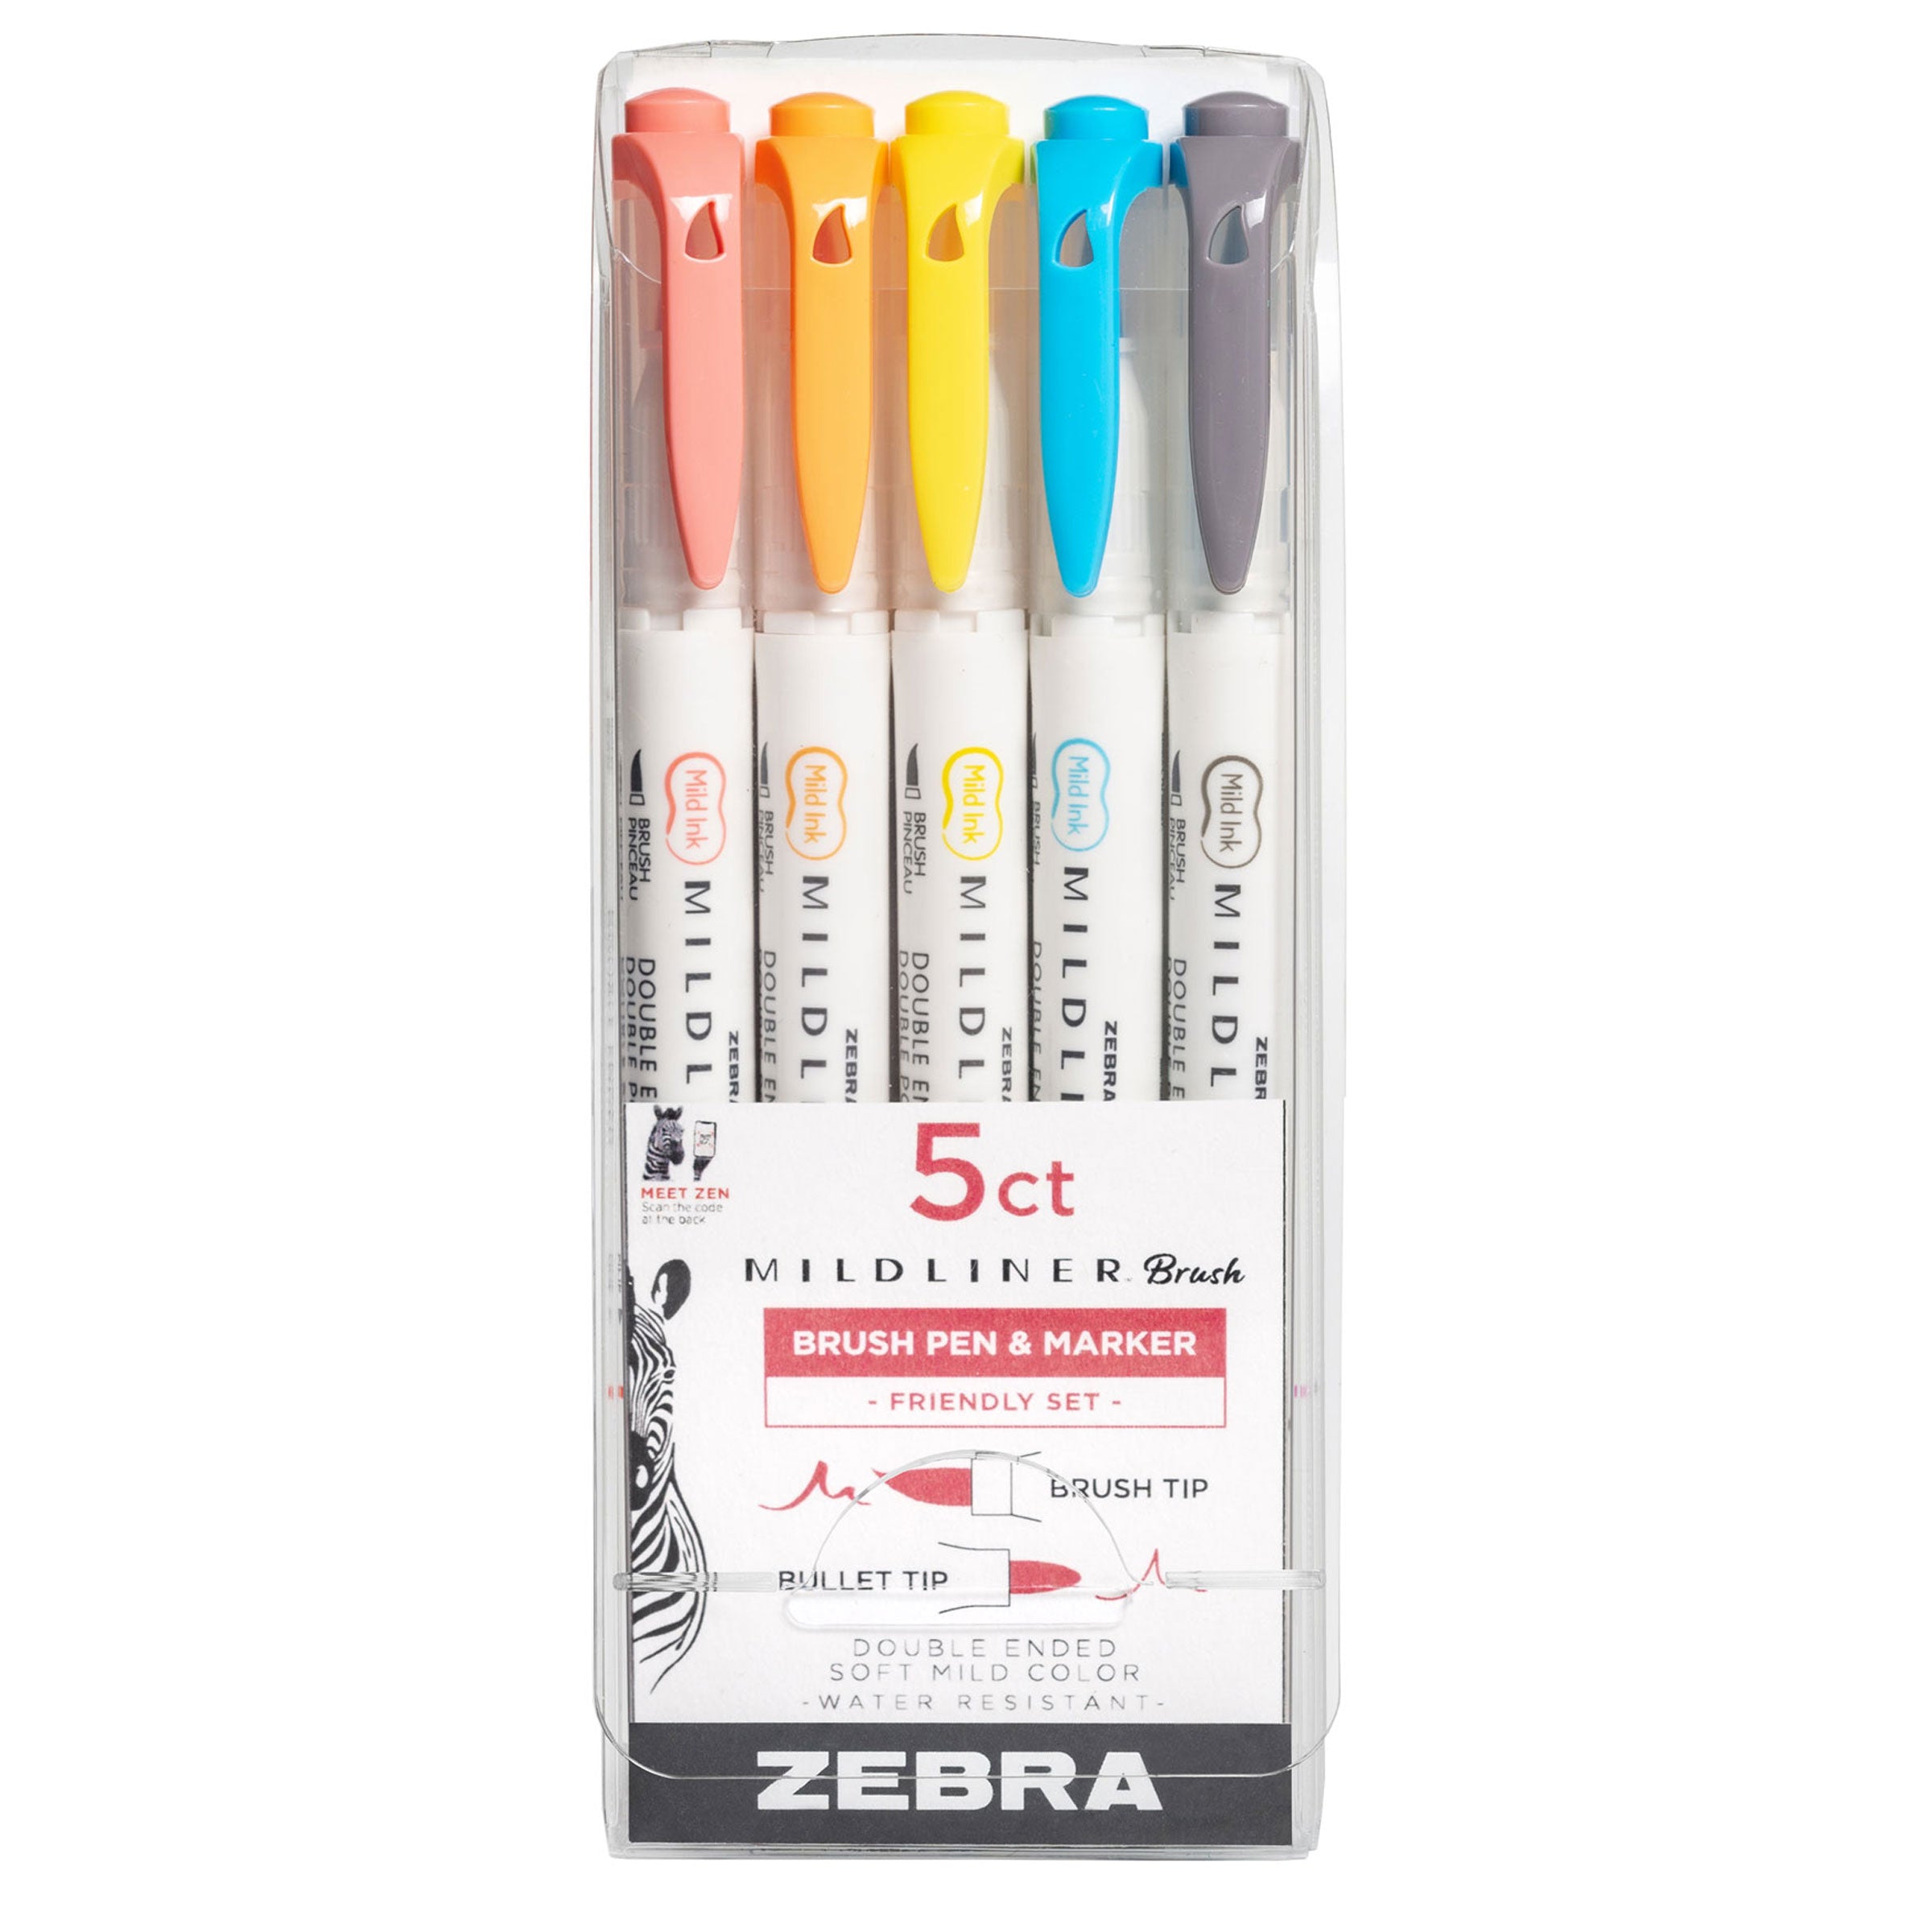 MILDLINER Dual-Tip Brush Pen